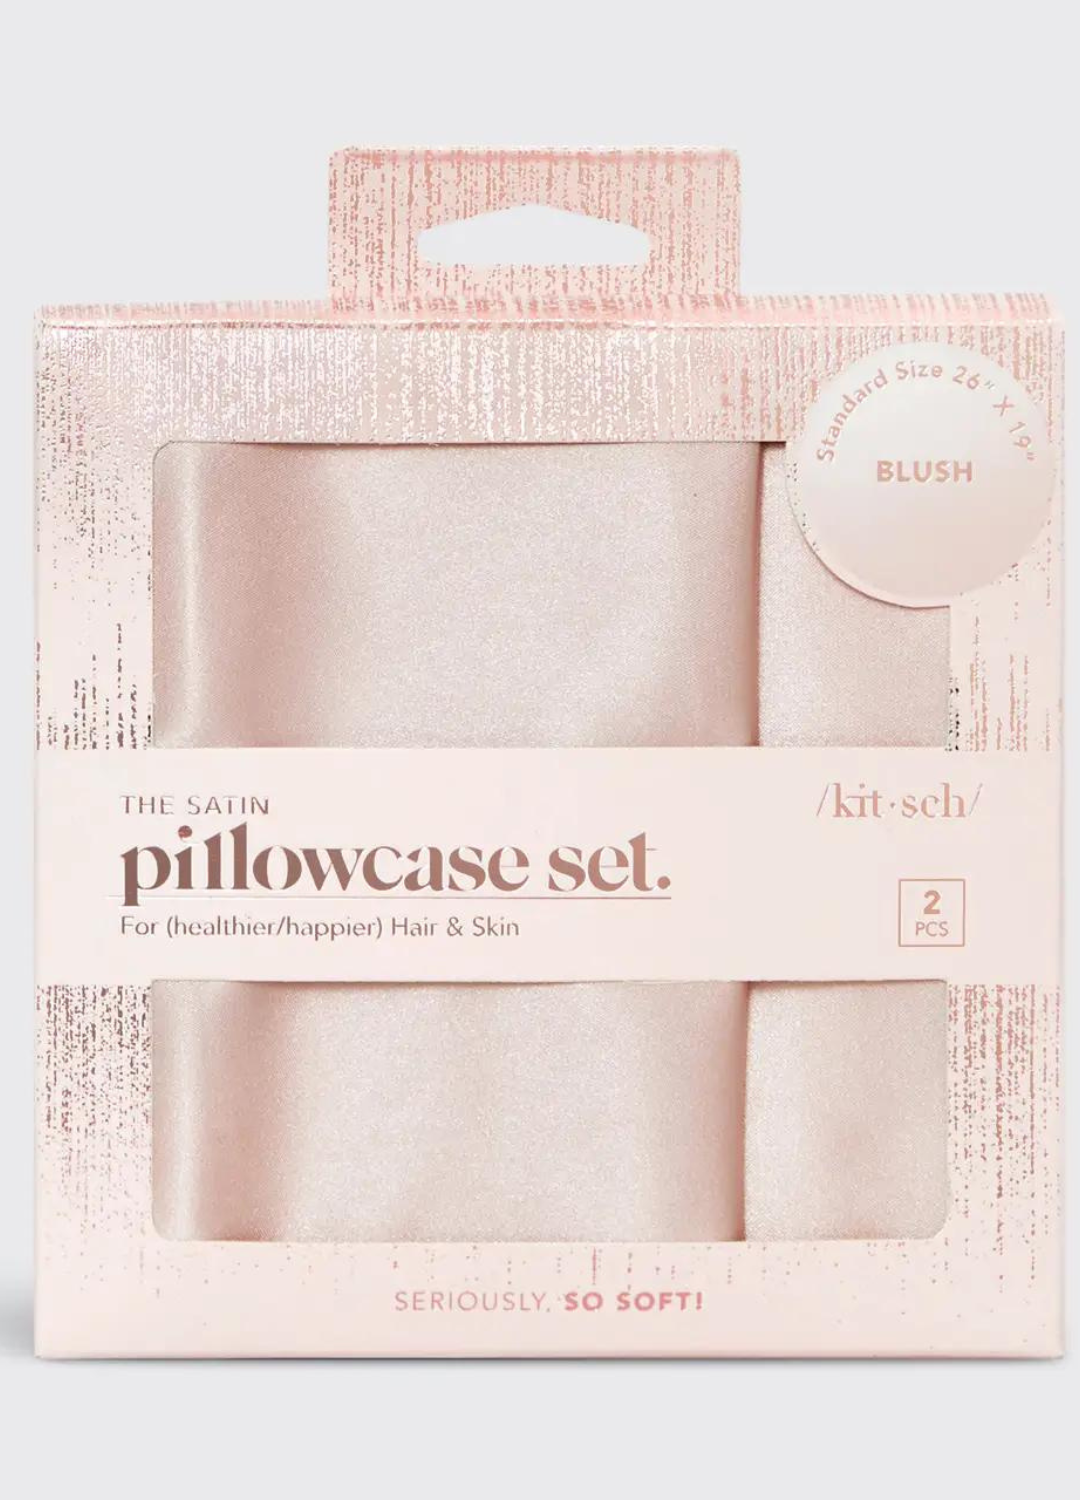 Satin Pillowcase Standard Size Blush 2-Pack